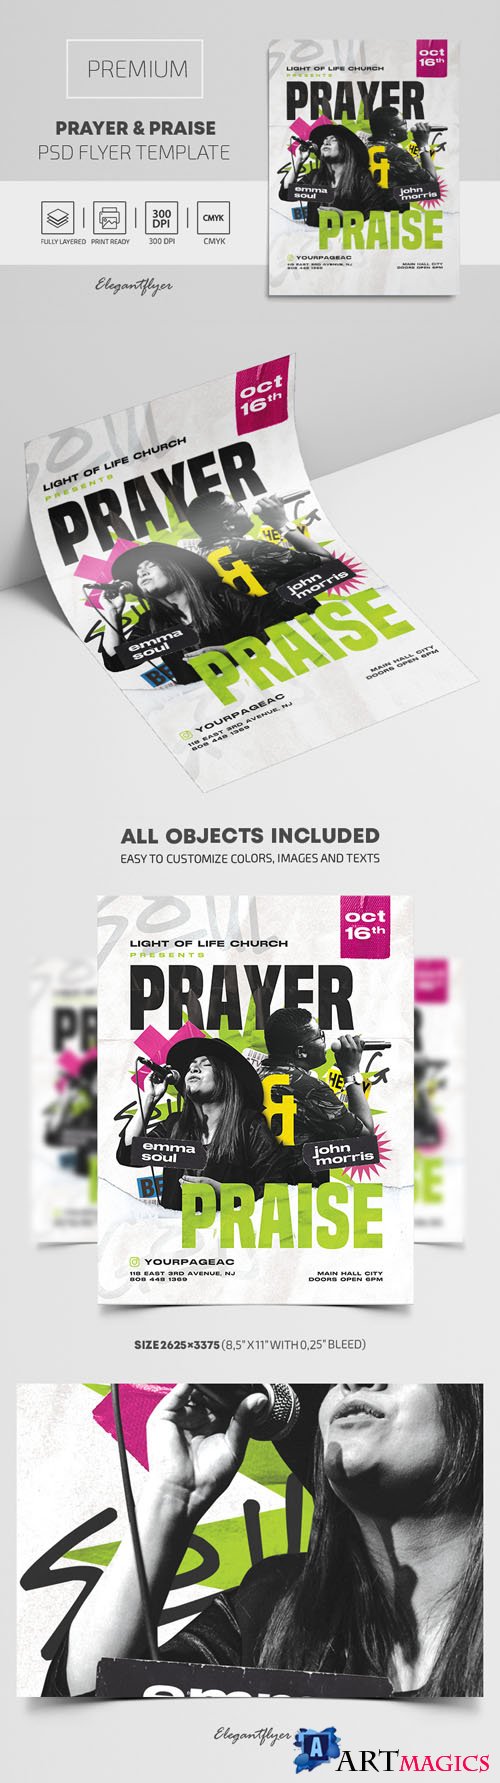 Prayer and Praise Premium PSD Flyer Template